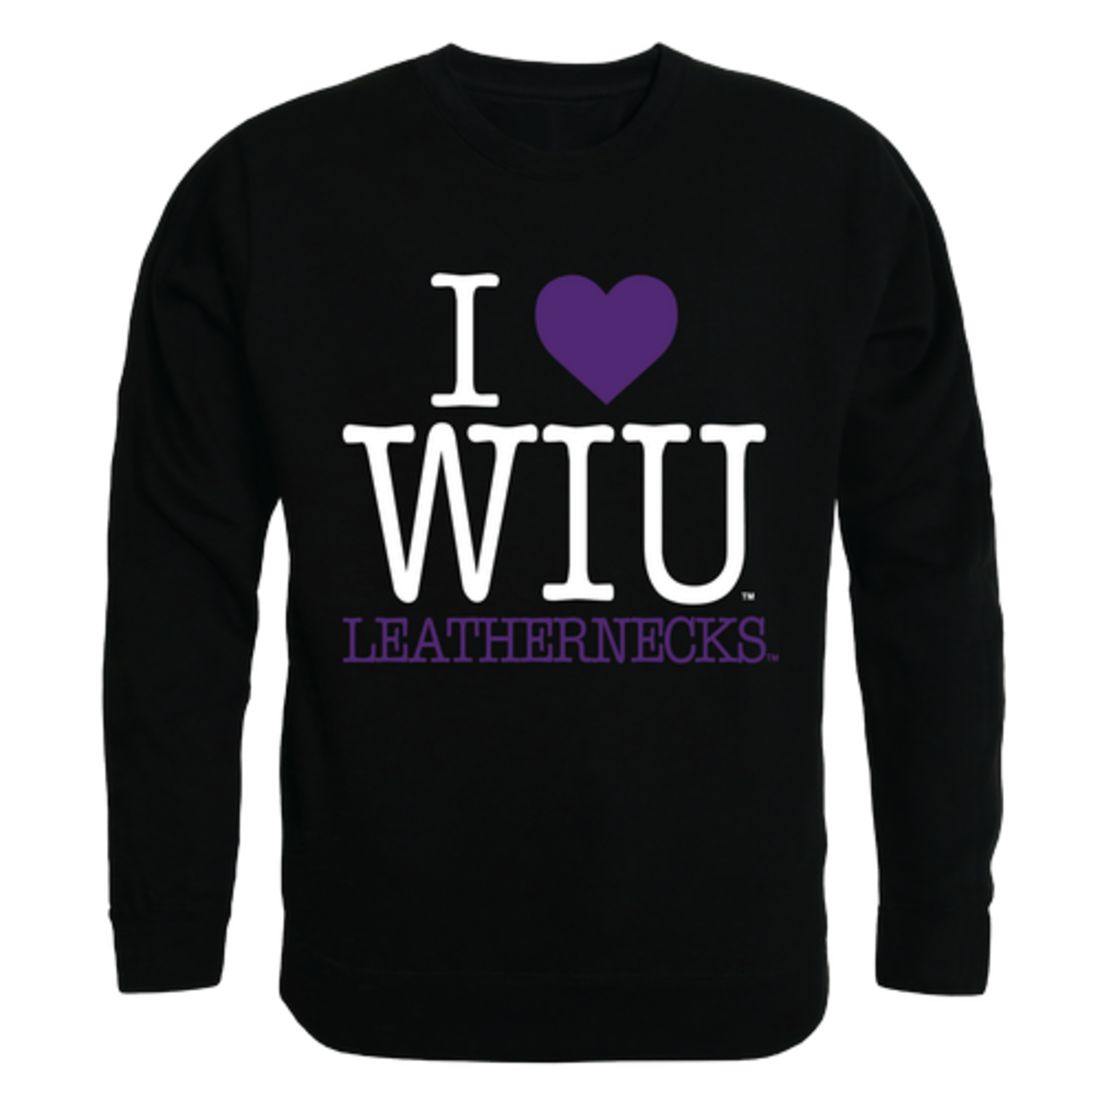 I Love WIU Western Illinois University Leathernecks Crewneck Pullover Sweatshirt Sweater-Campus-Wardrobe